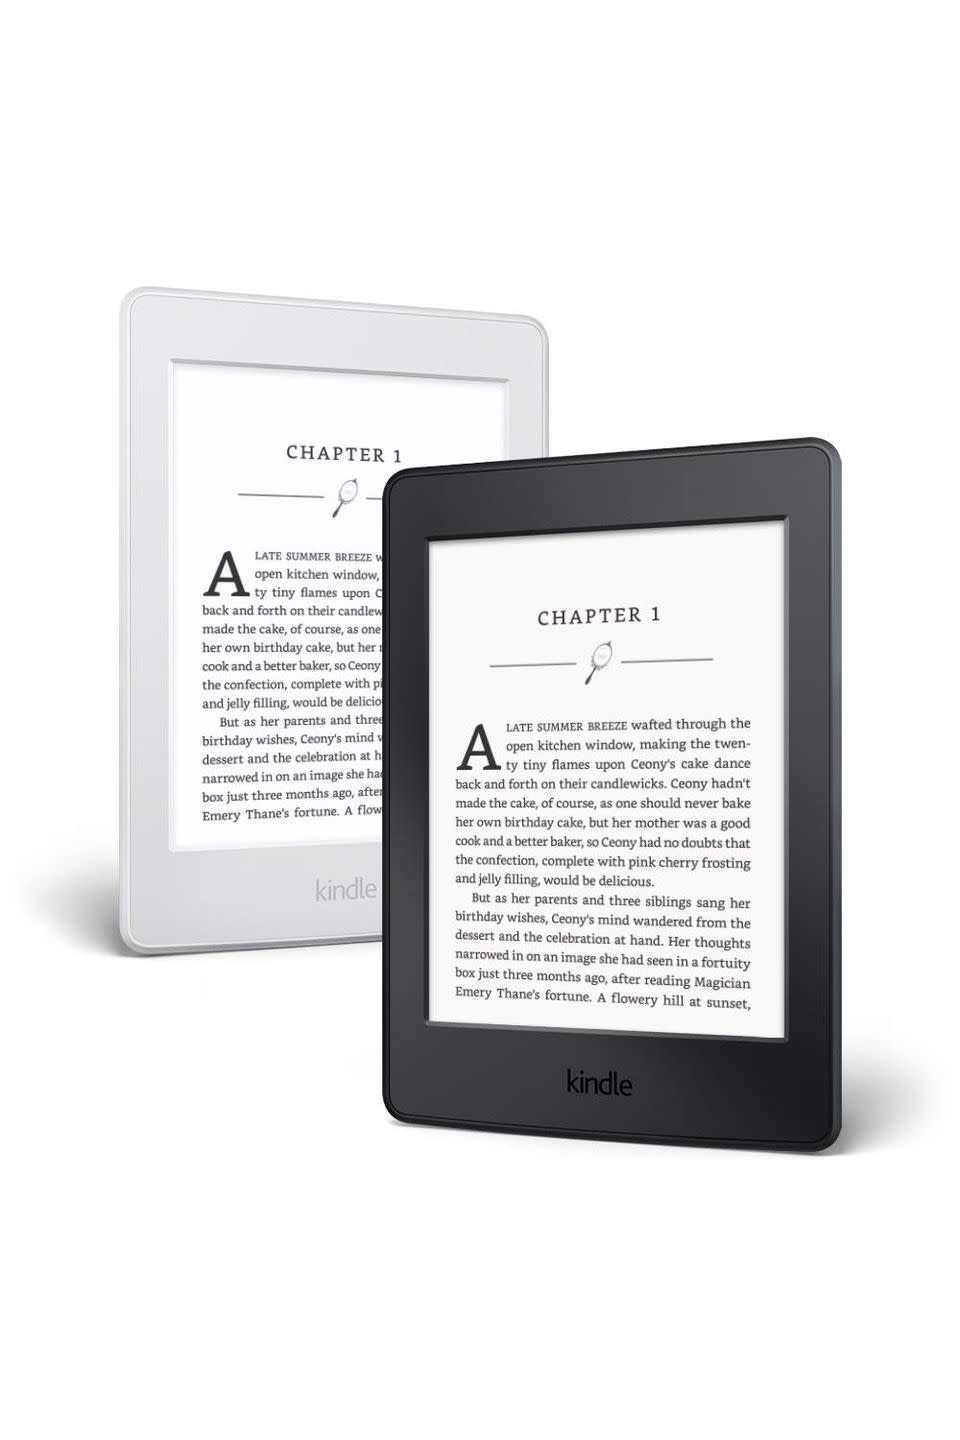 2) Kindle Paperwhite E-Reader